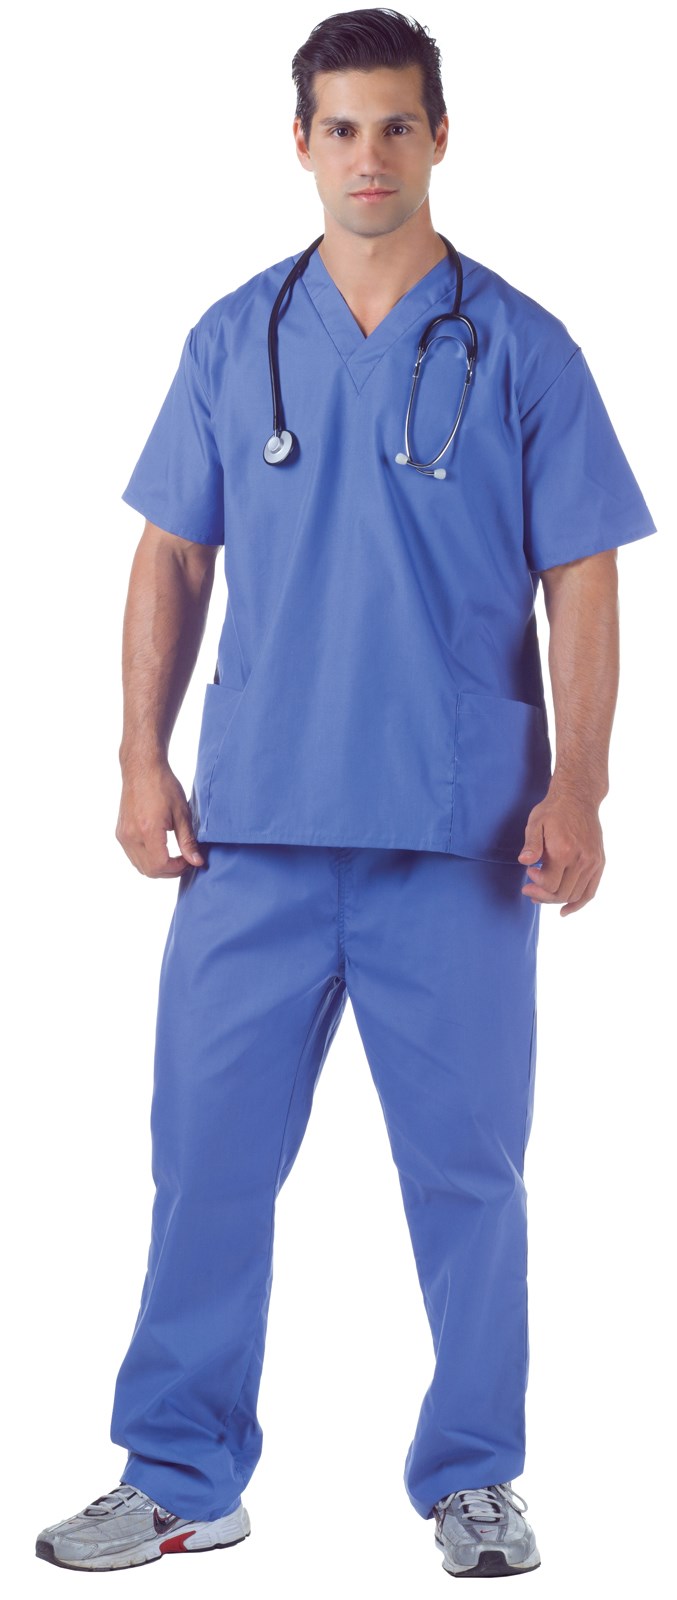 Hospital Scrubs – Adult Costume